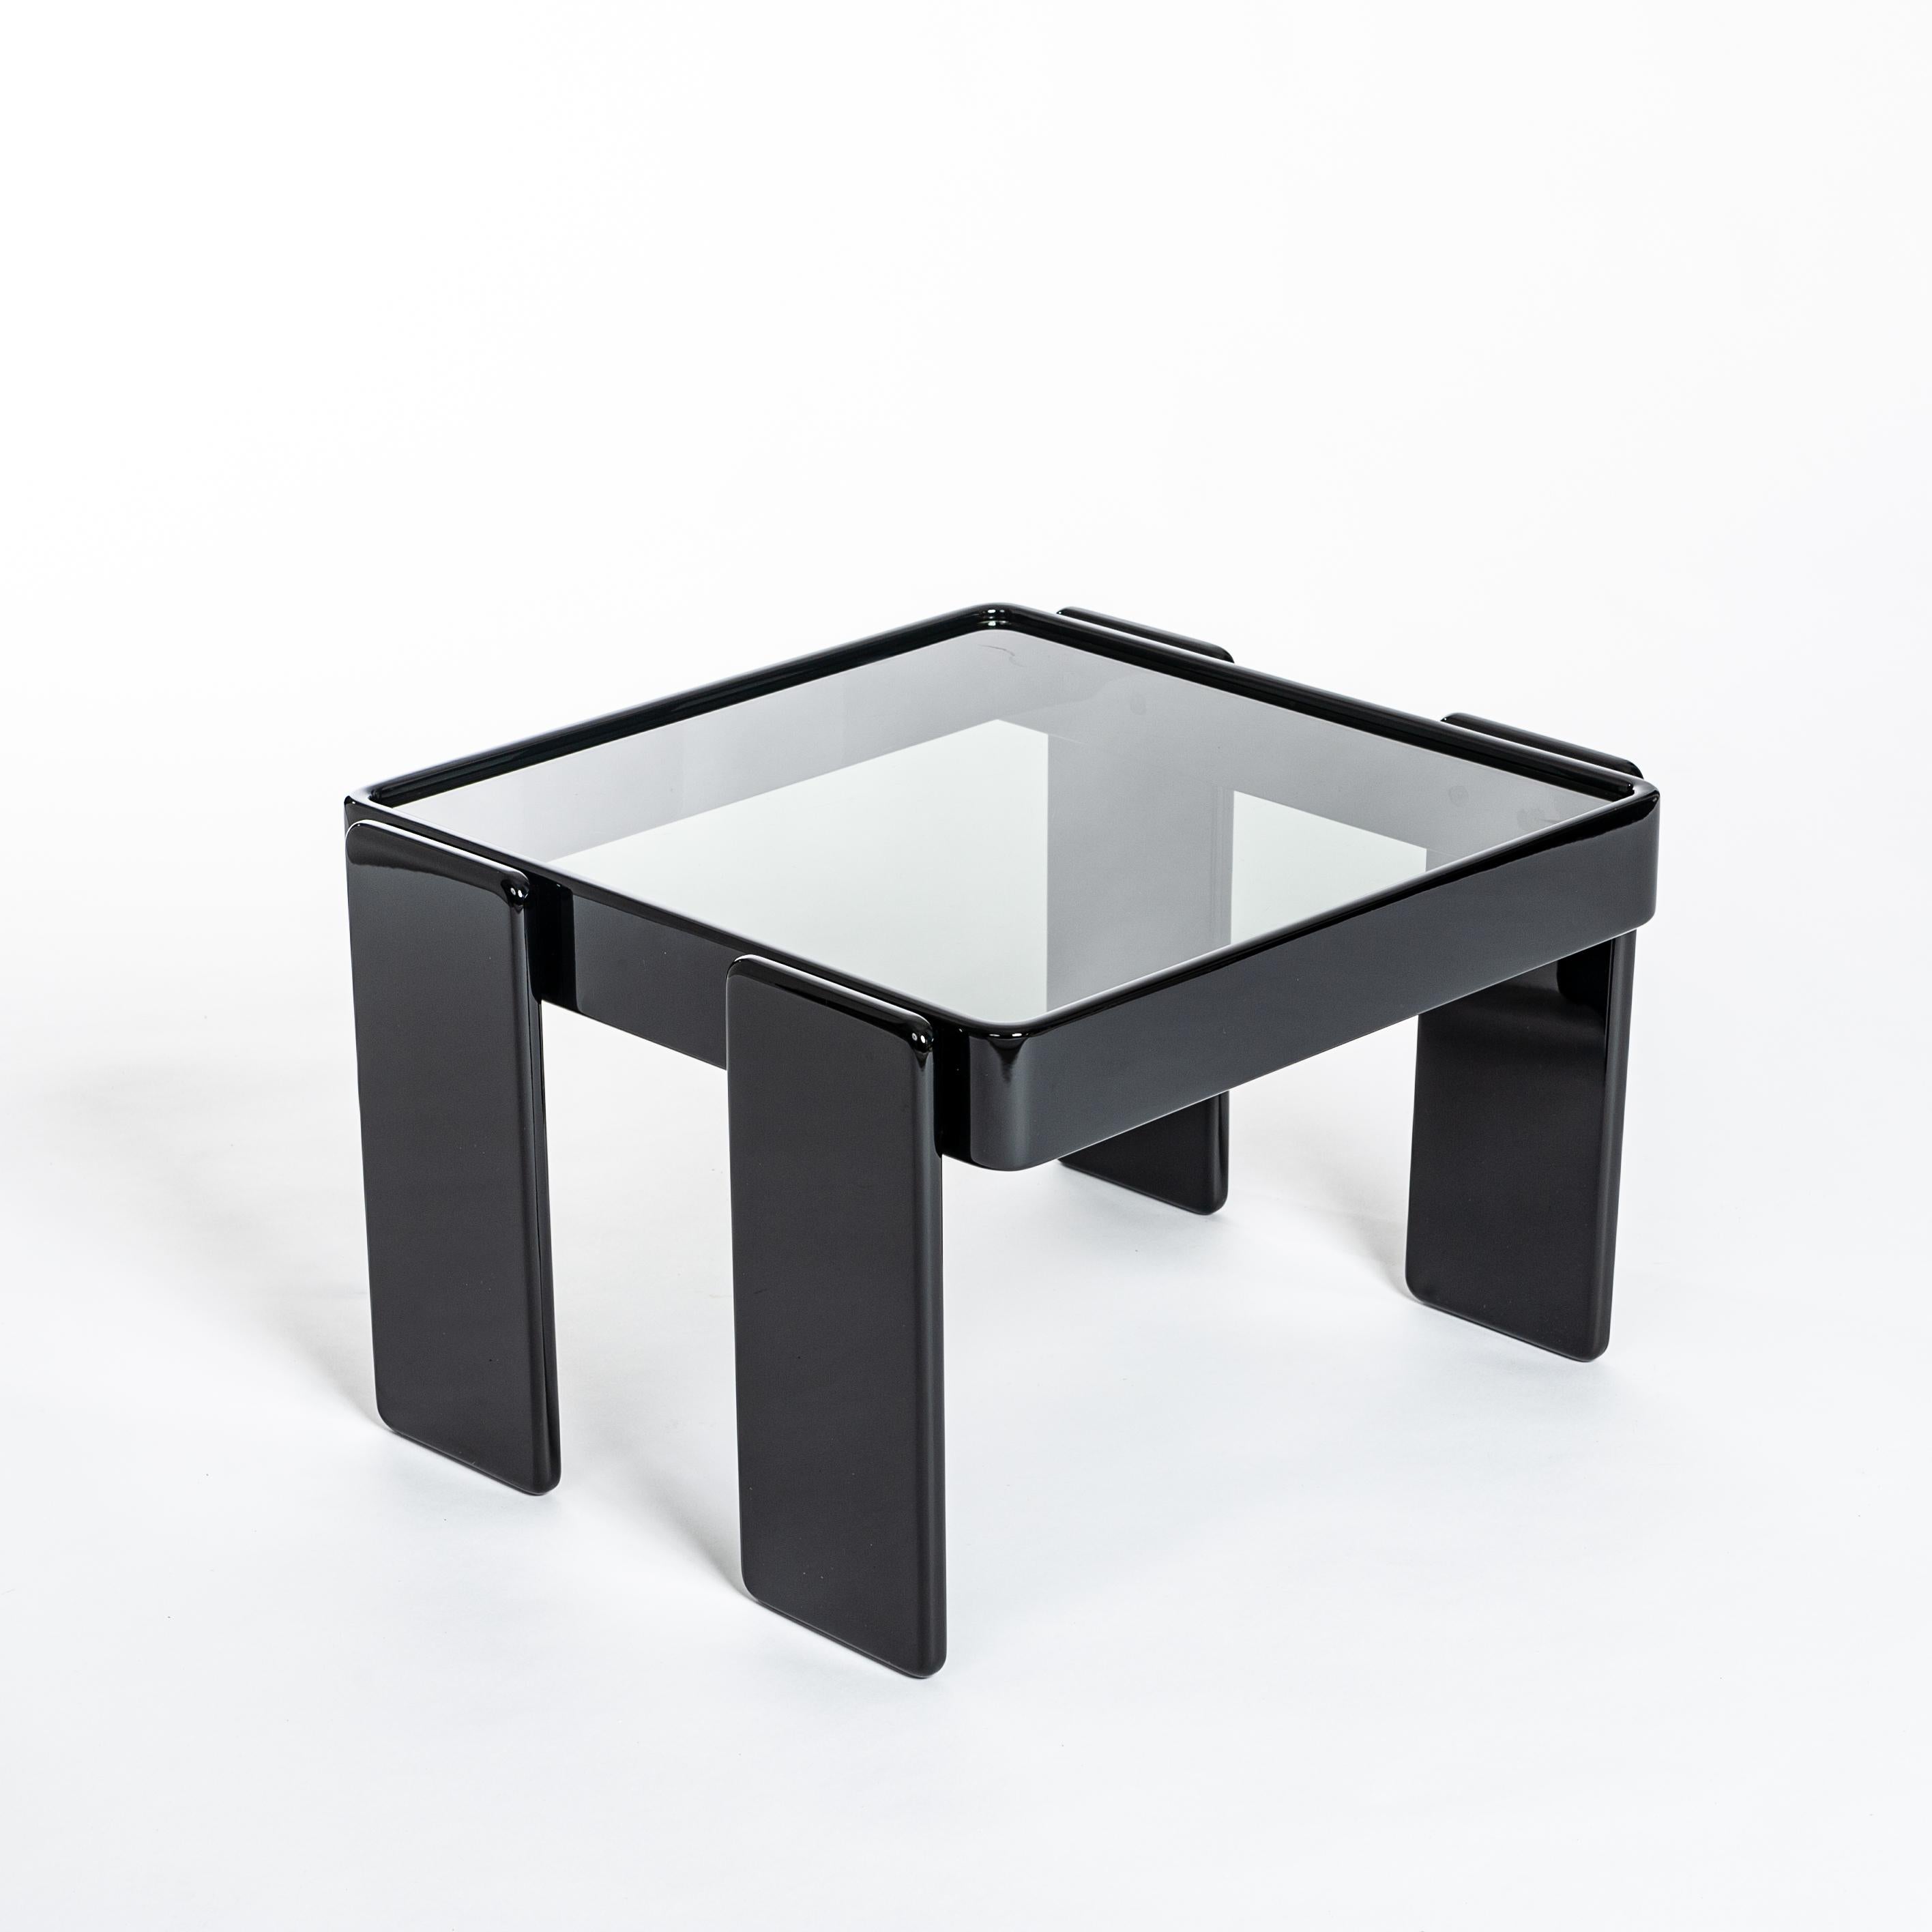 Italian Midcentury Gianfranco Frattini Black Nesting Tables for Cassina, 1960s For Sale 1